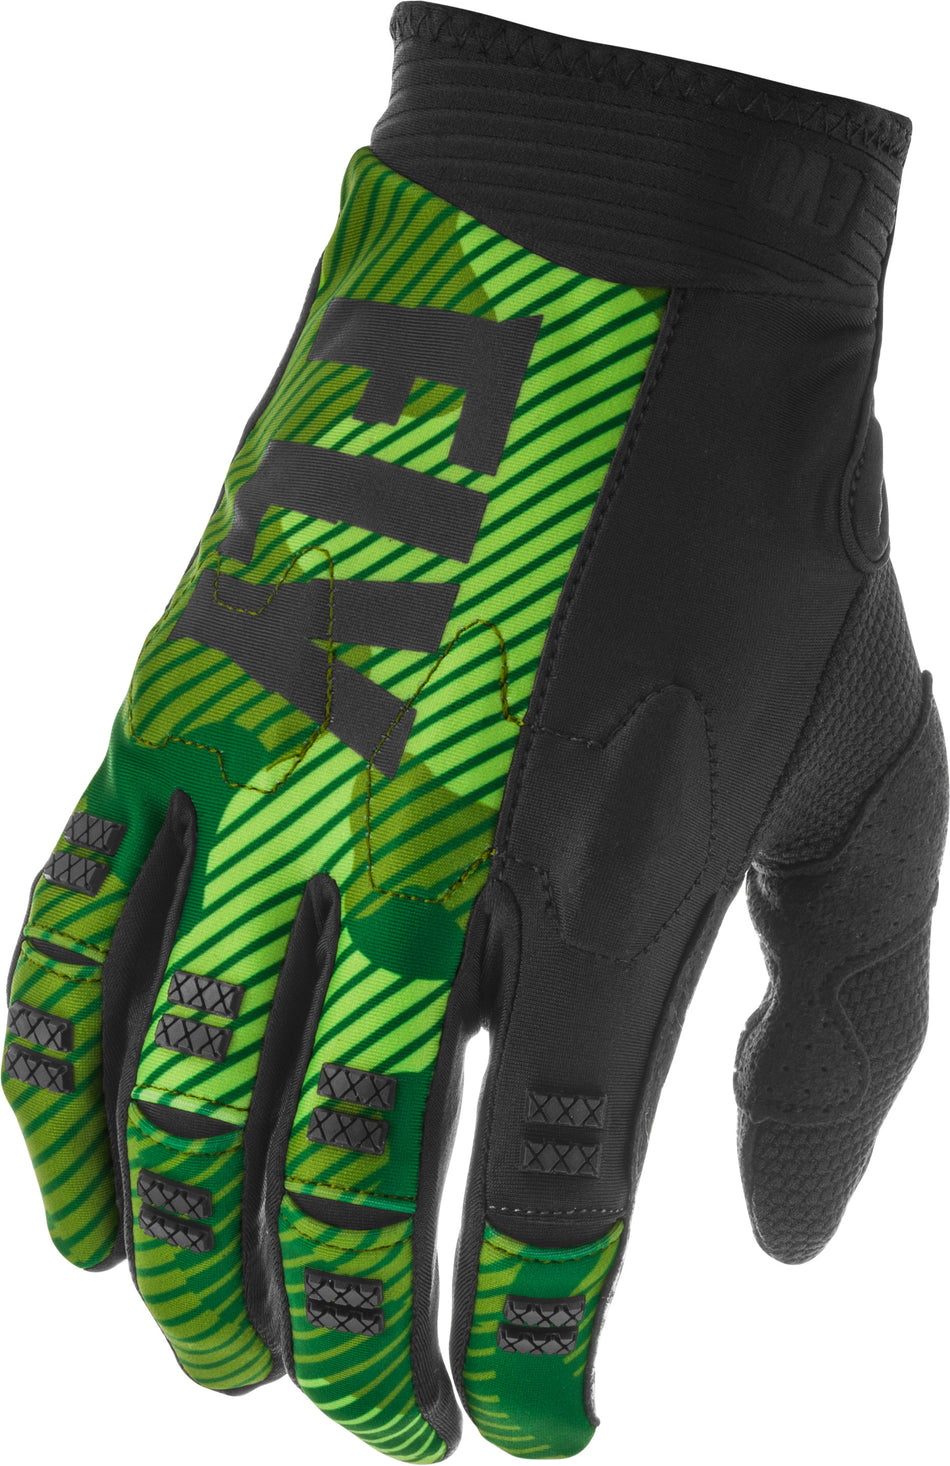 FLY RACING Evolution Gloves Green/Black Sz 12 373-11412